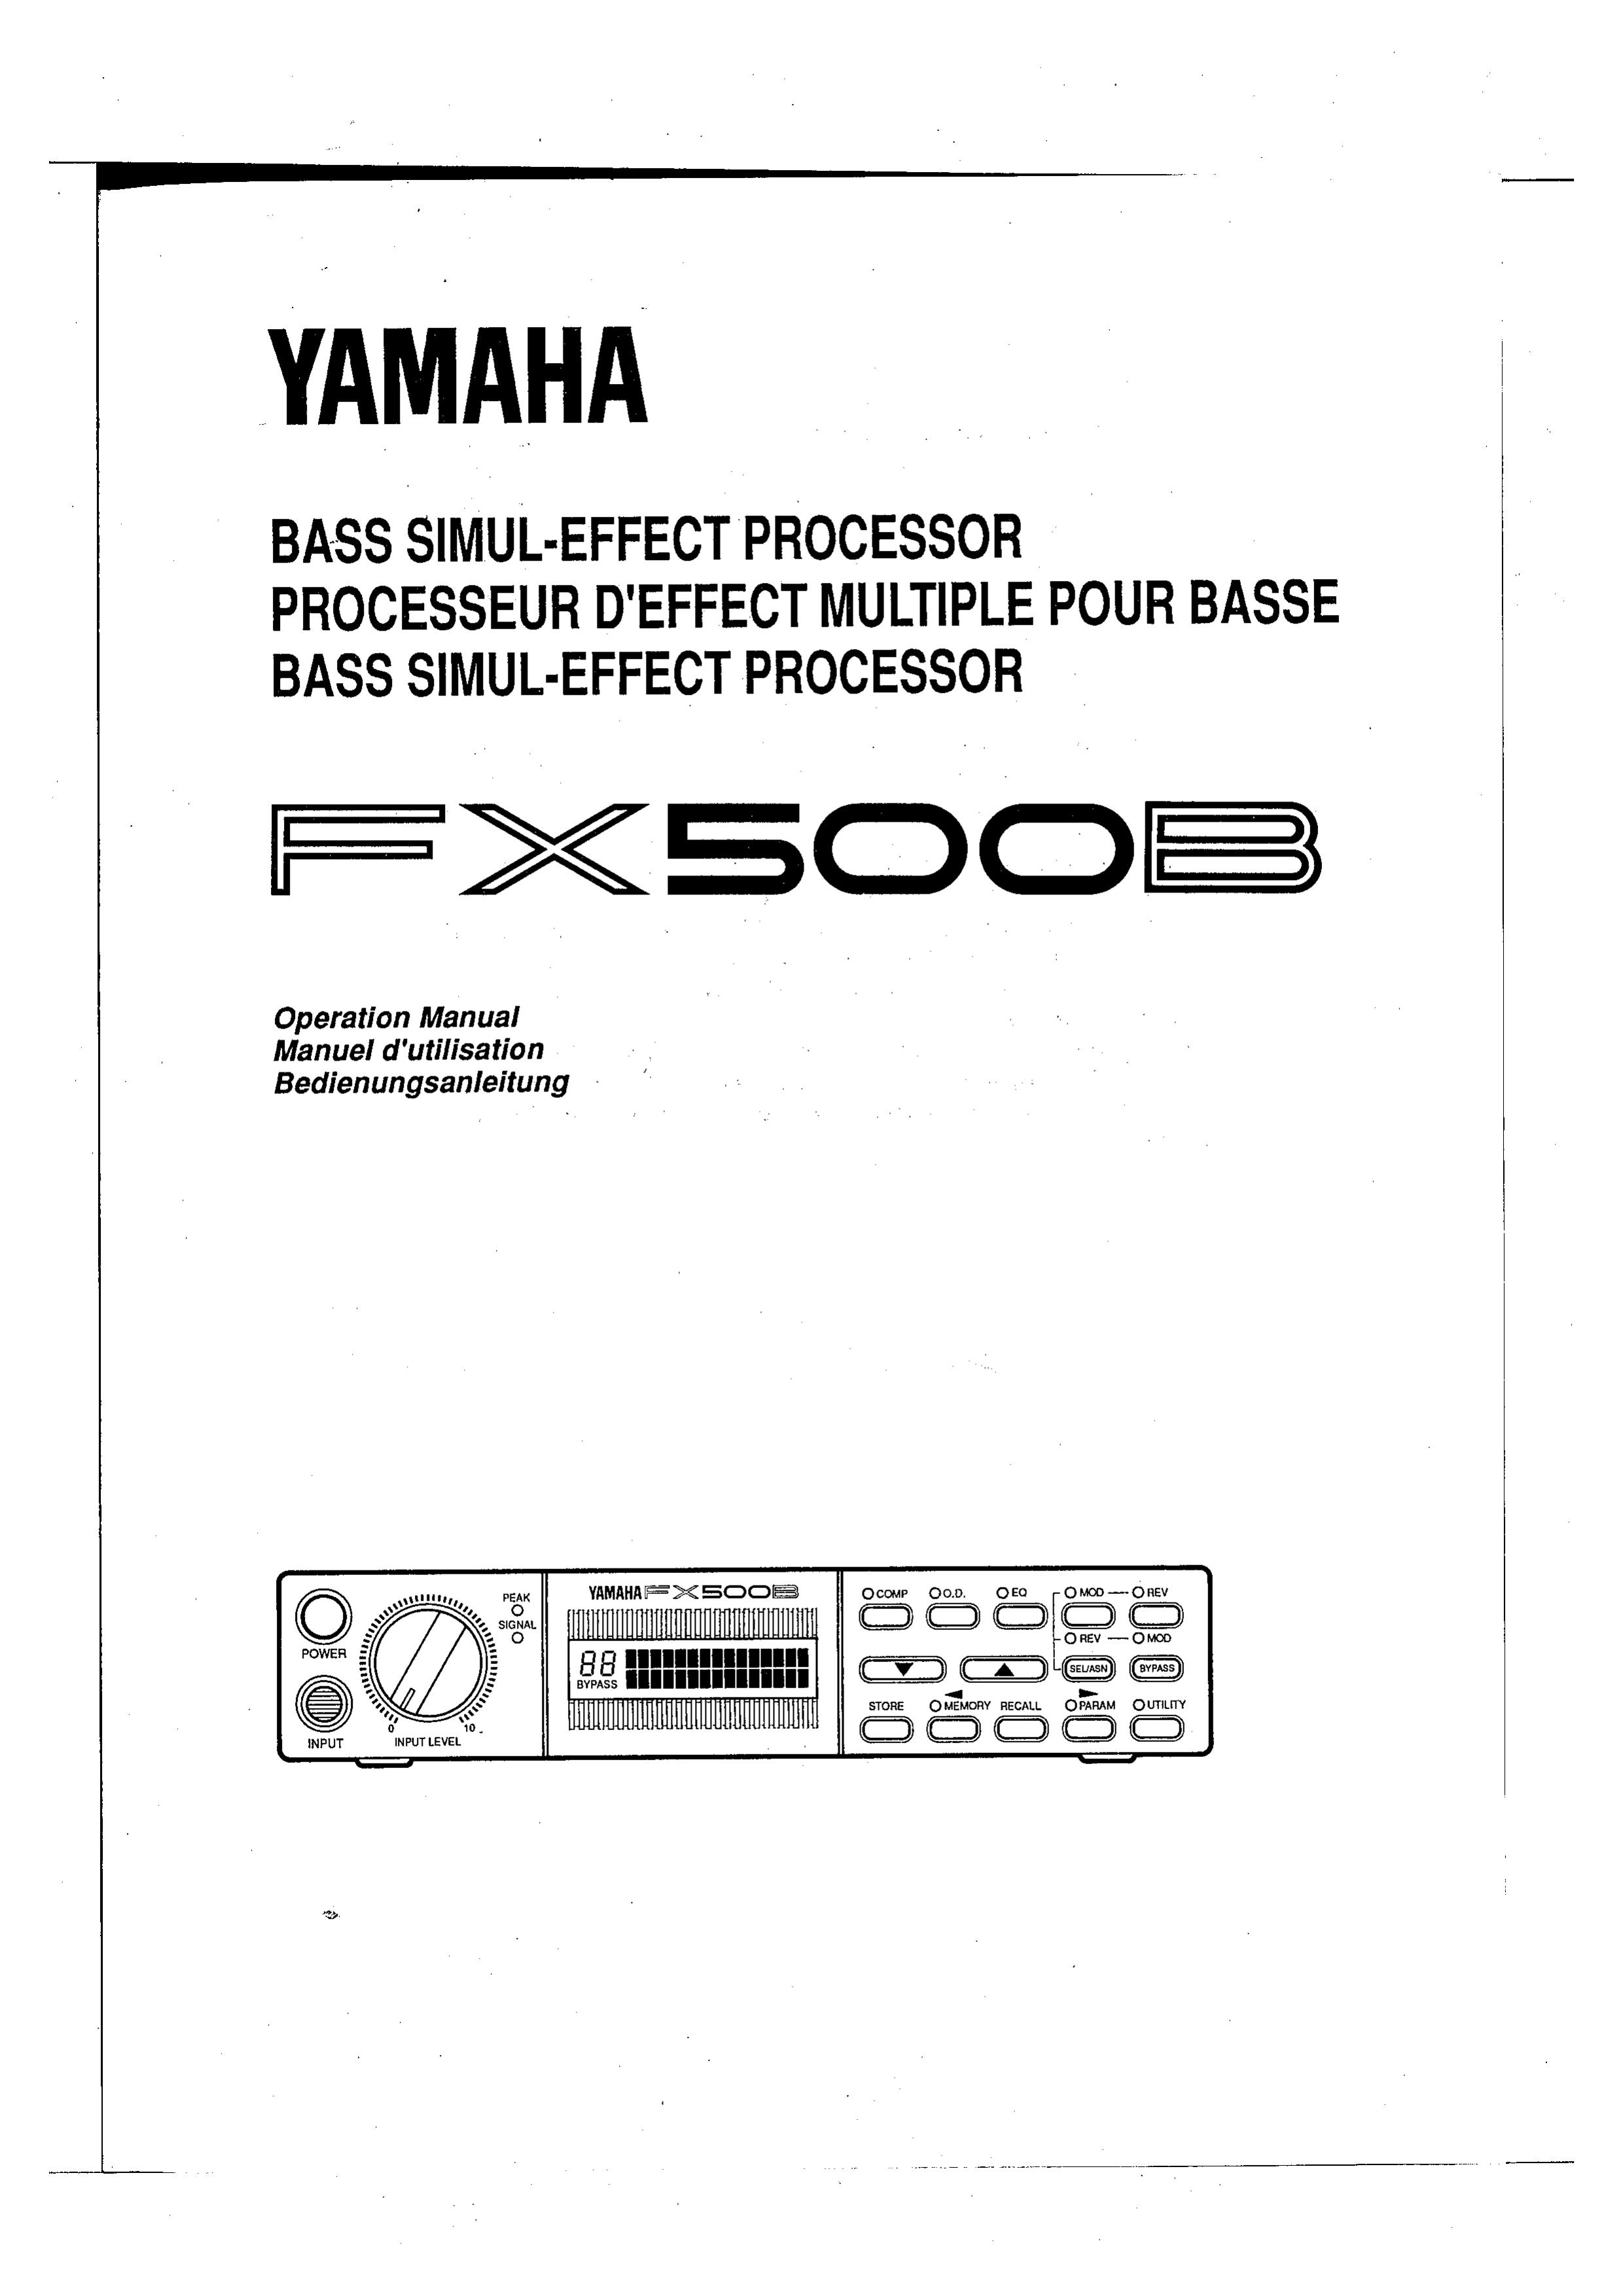 Yamaha FX500B DJ Equipment User Manual